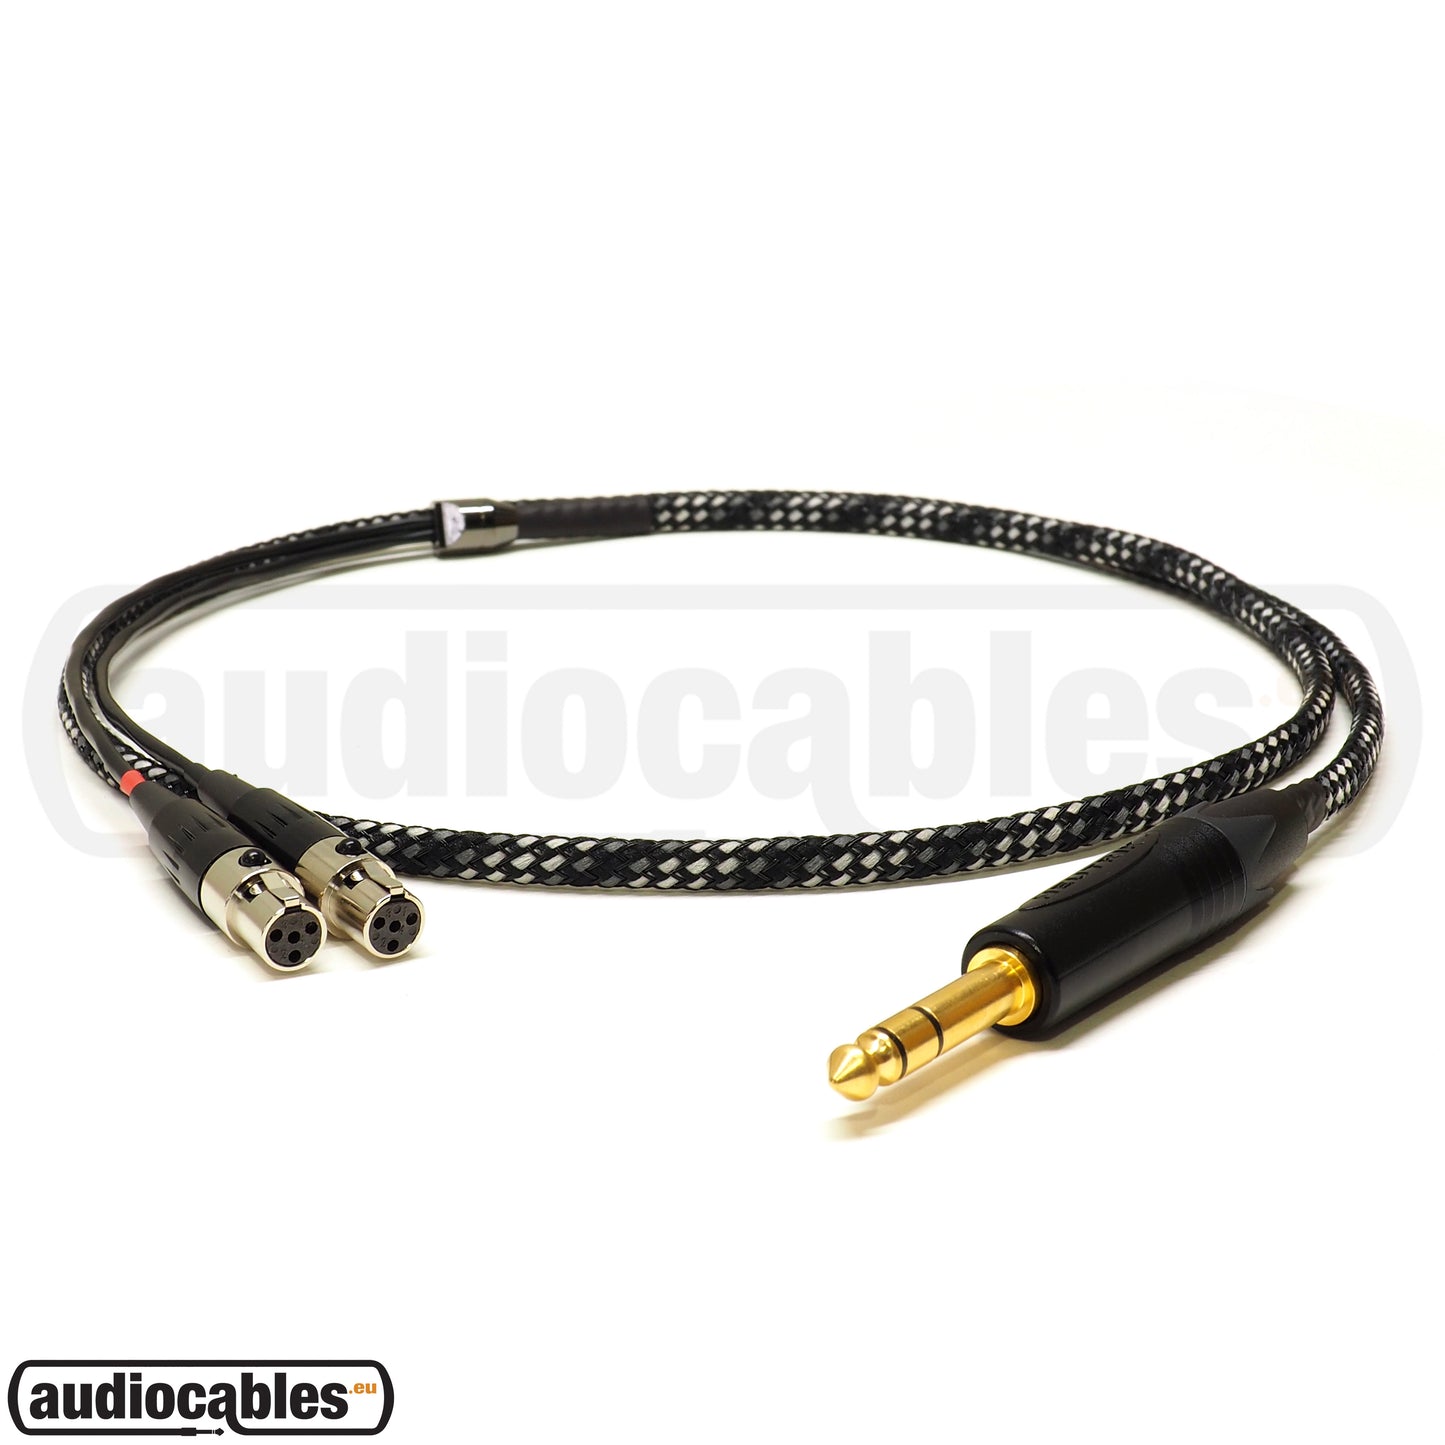 Mogami Cable for Audeze Headphones (Braided, dual 4pin mini xlr)